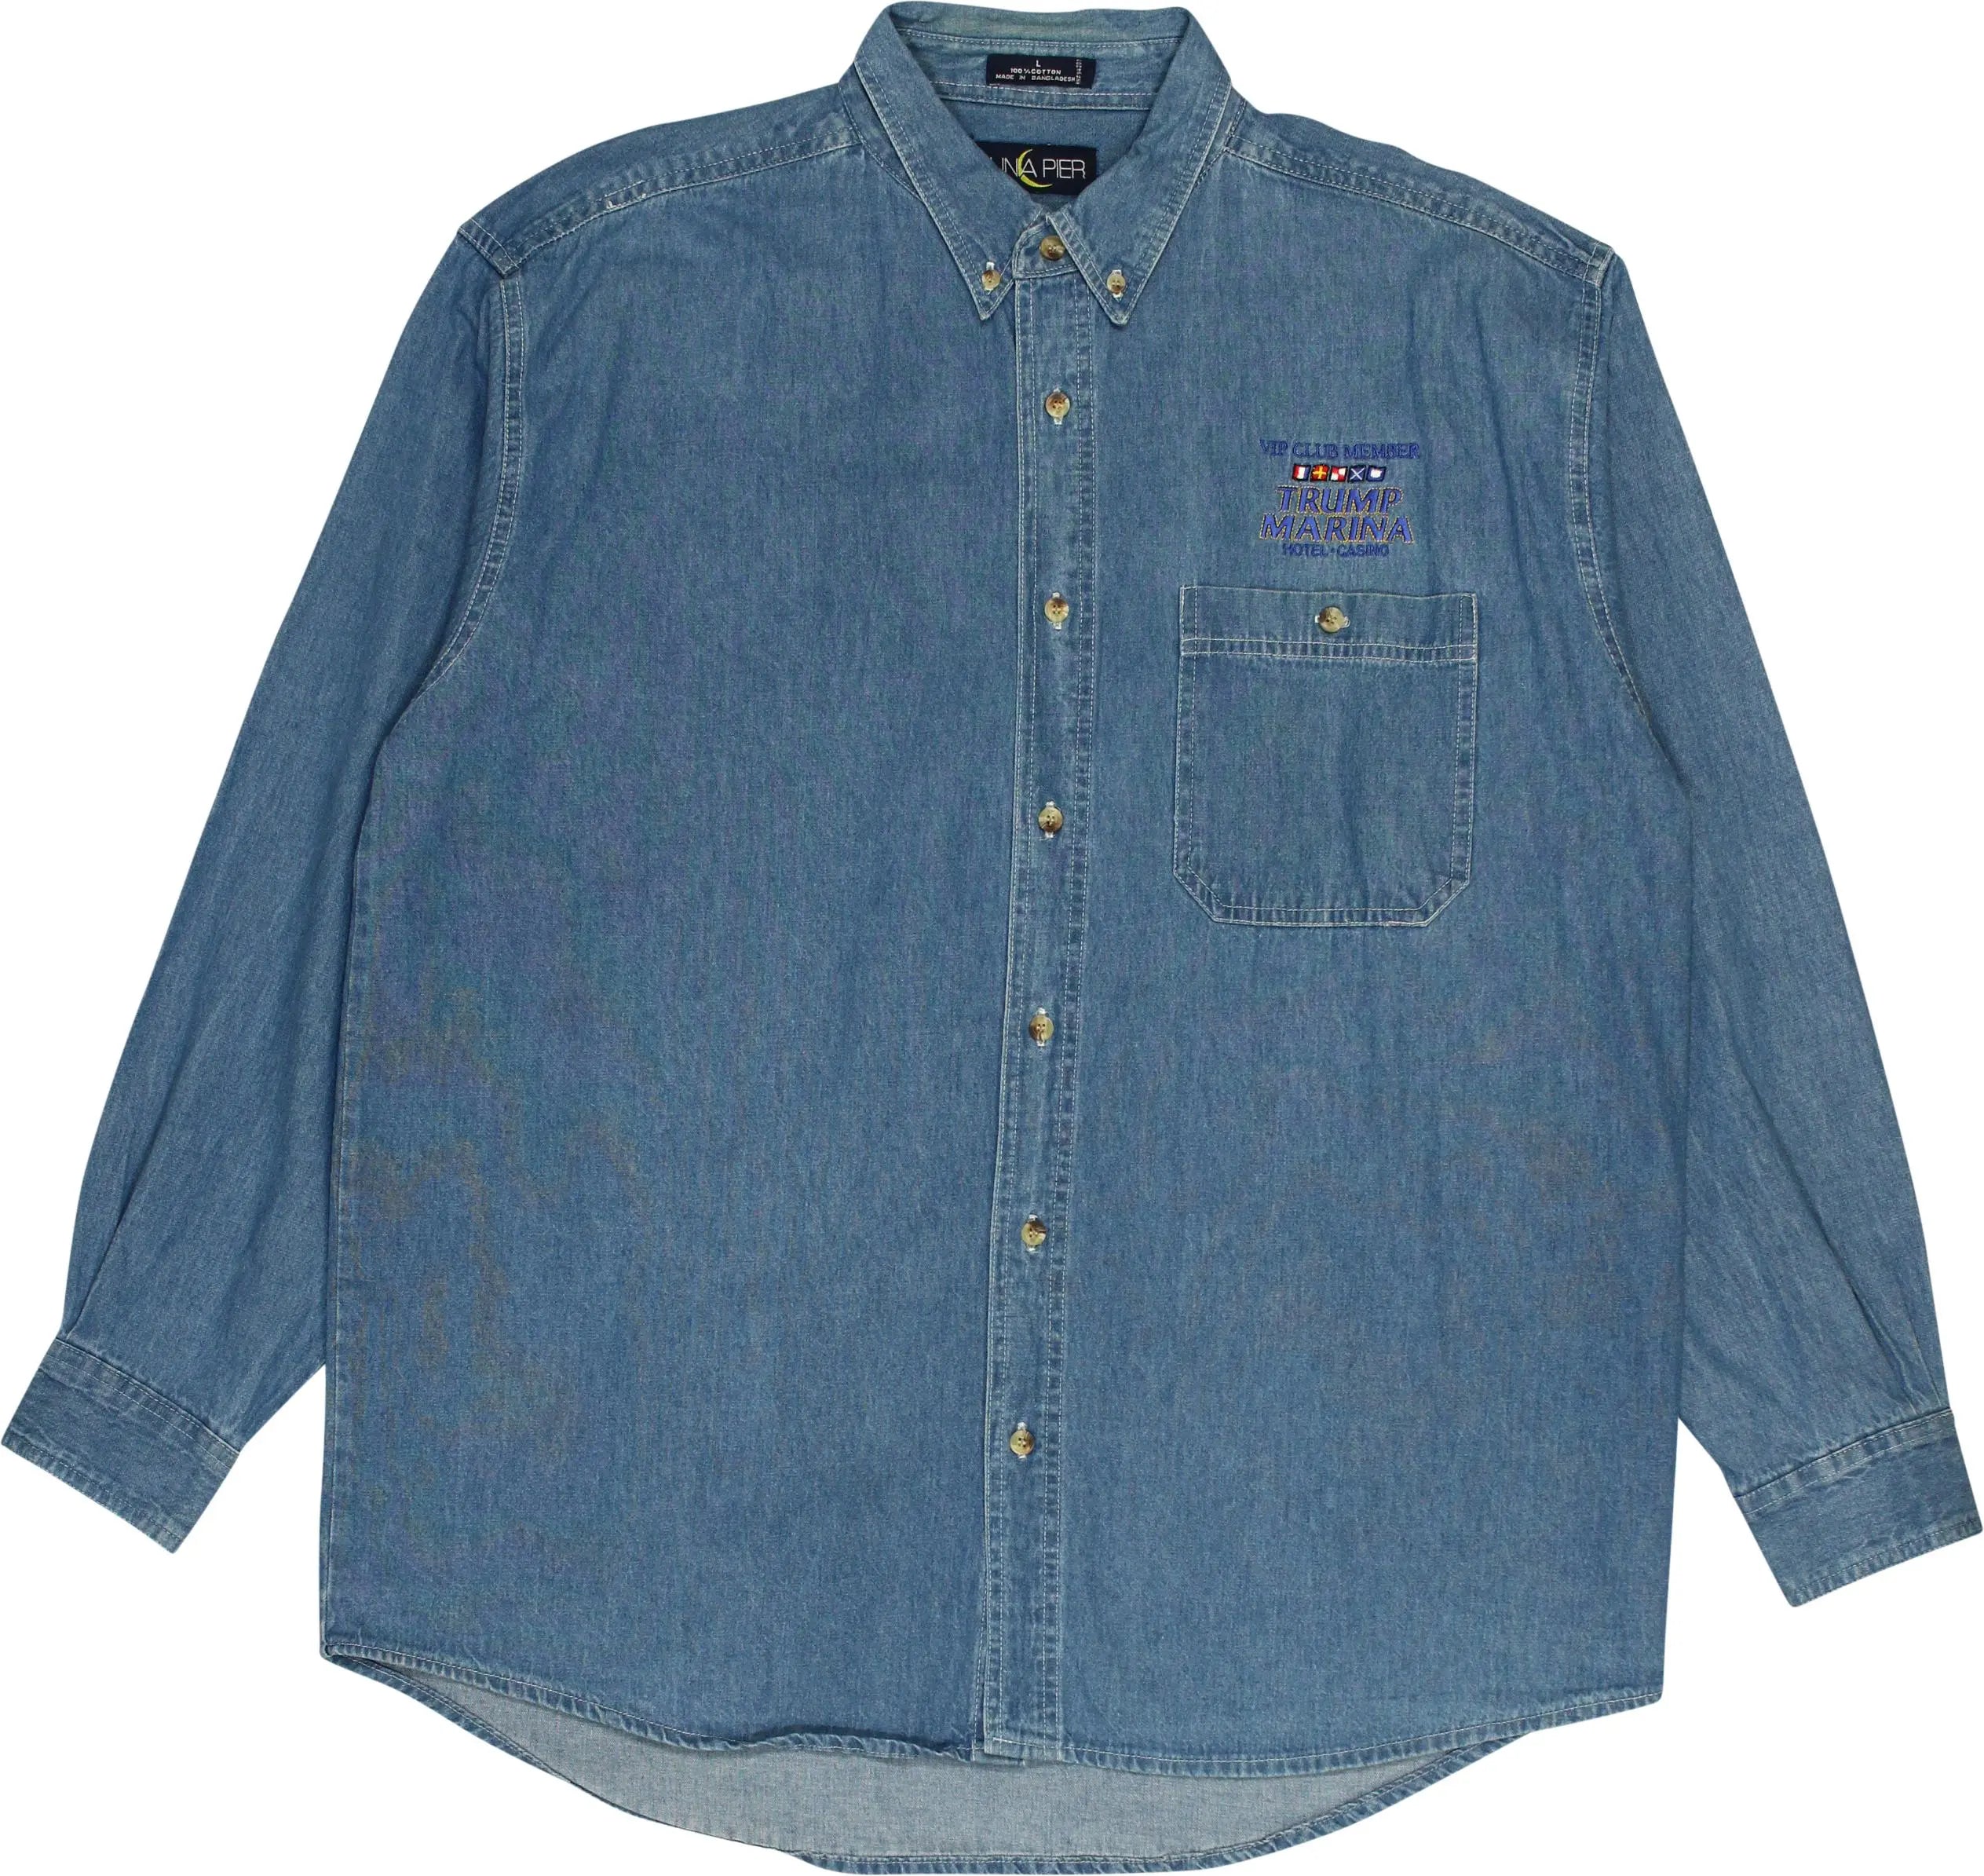 Luna Pier - Denim Shirt- ThriftTale.com - Vintage and second handclothing